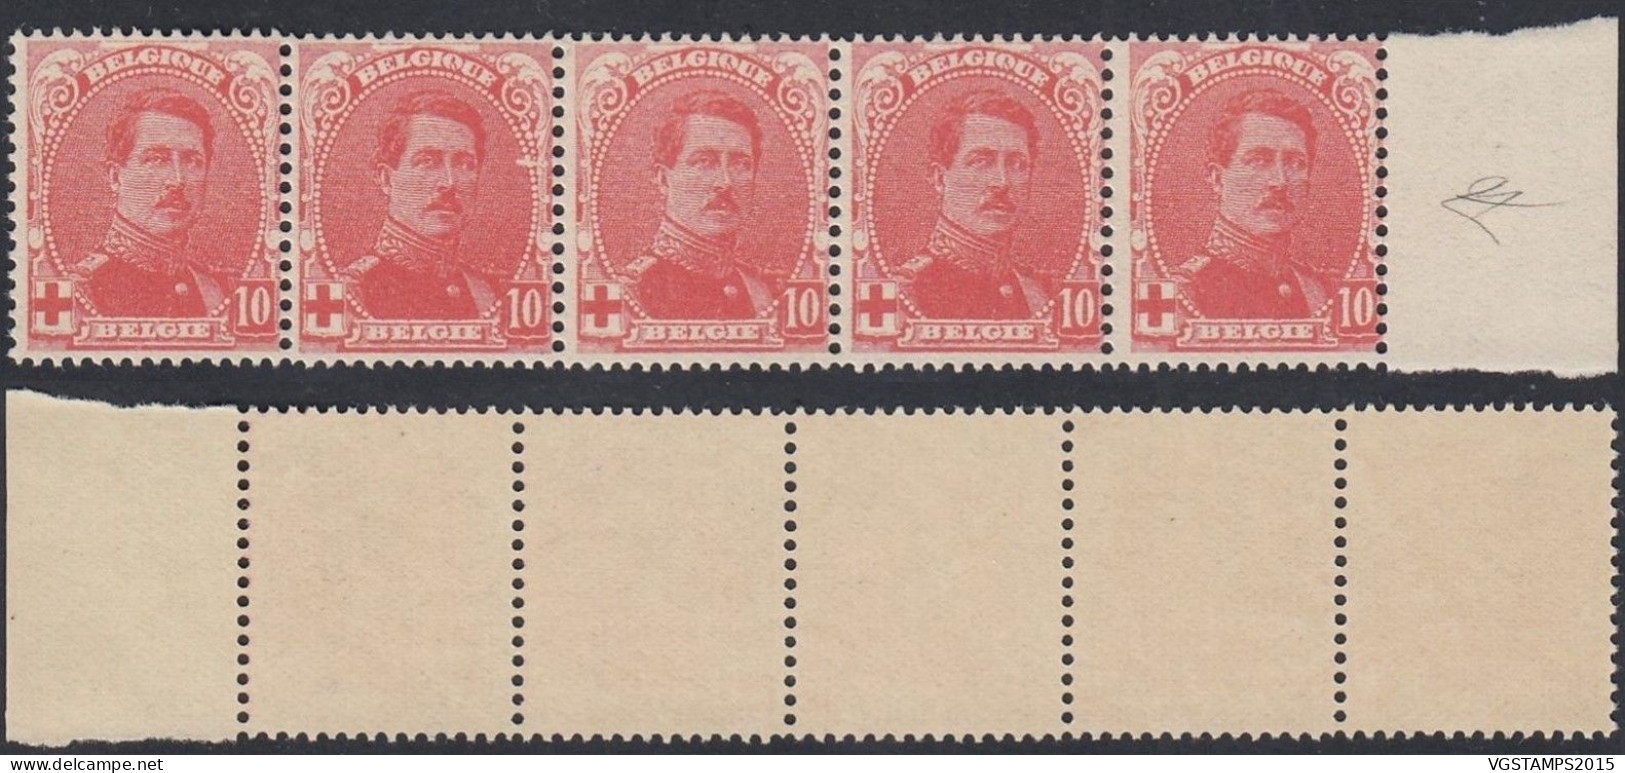 Belgique 1914 - Timbres Neufs. Nr.: 130 V. Bande De 5 Timbres................ (EB) AR-02046 - 1914-1915 Rode Kruis